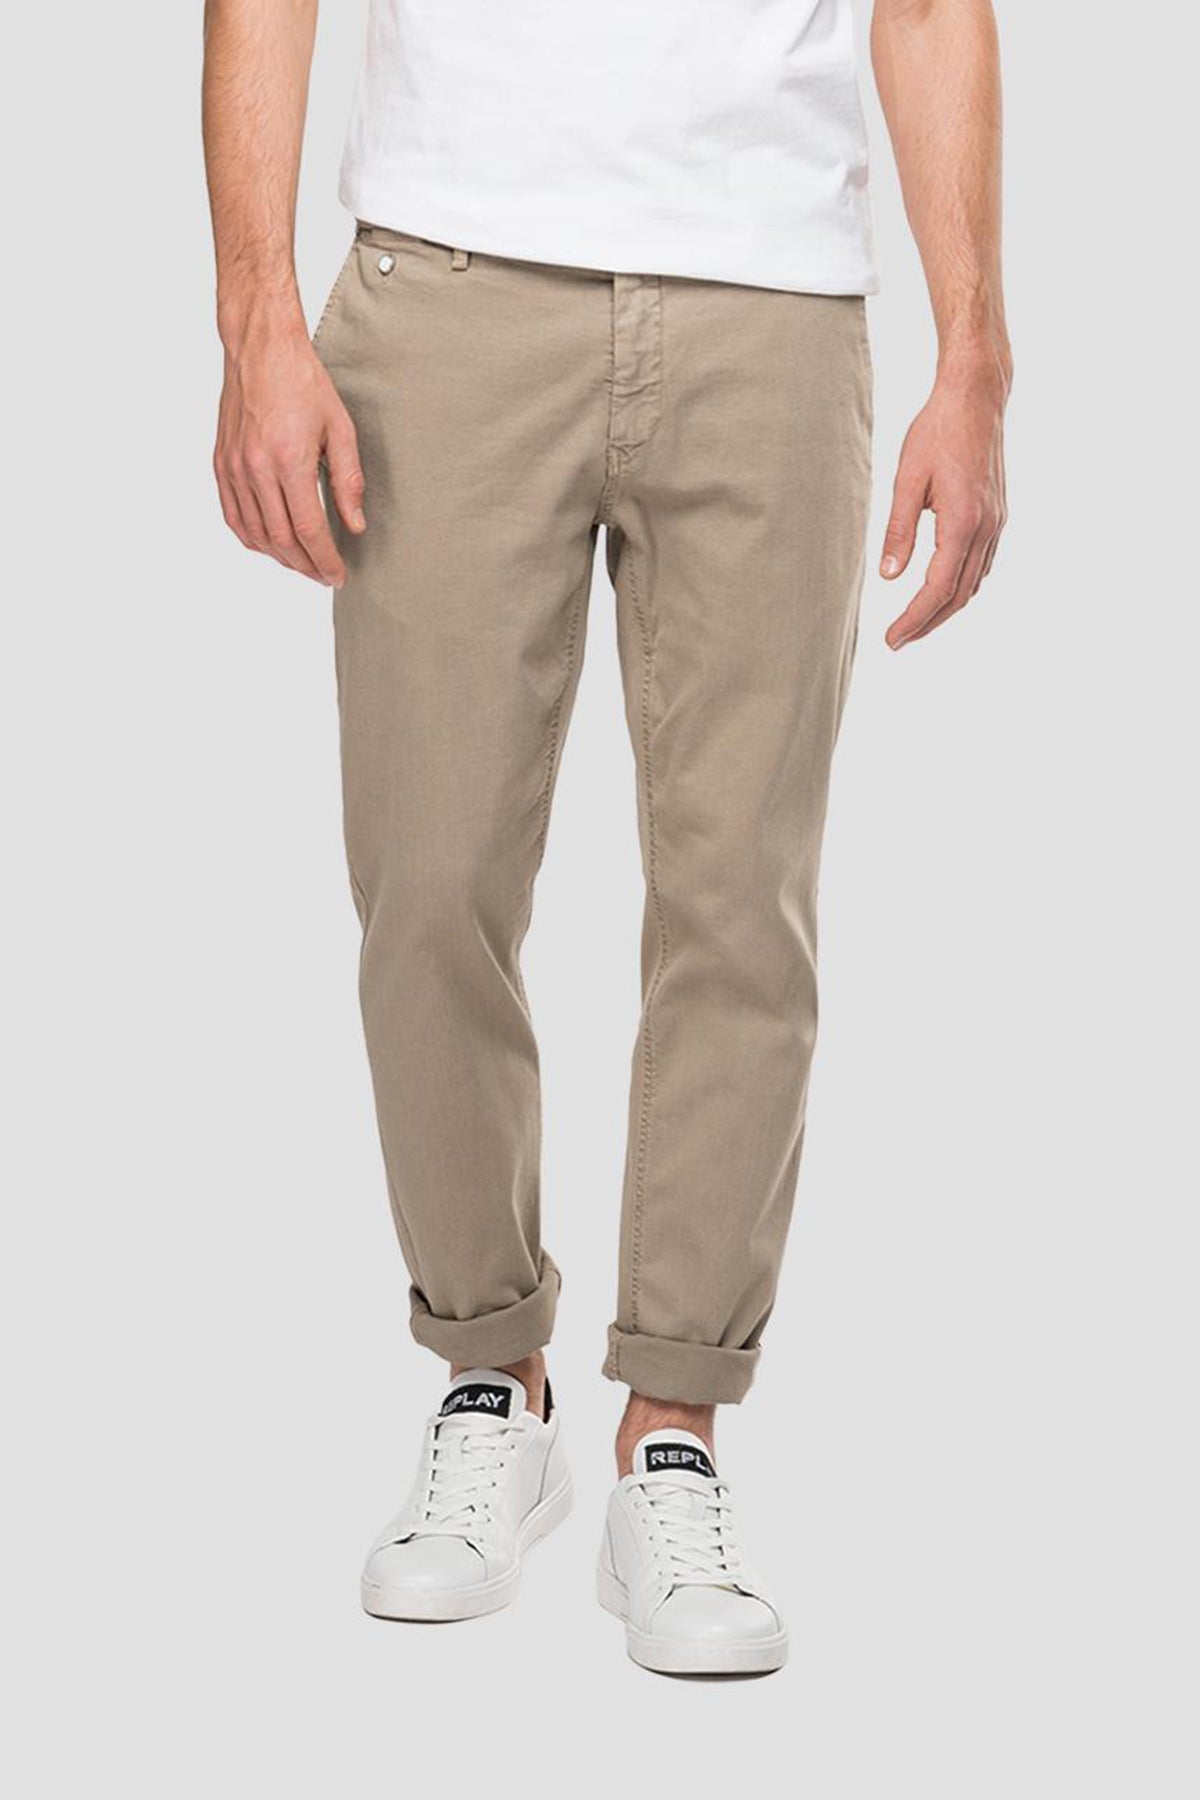 Replay Benni Regular Fit Hyperflex Extra Light Yandan Cep Pantolon-Libas Trendy Fashion Store